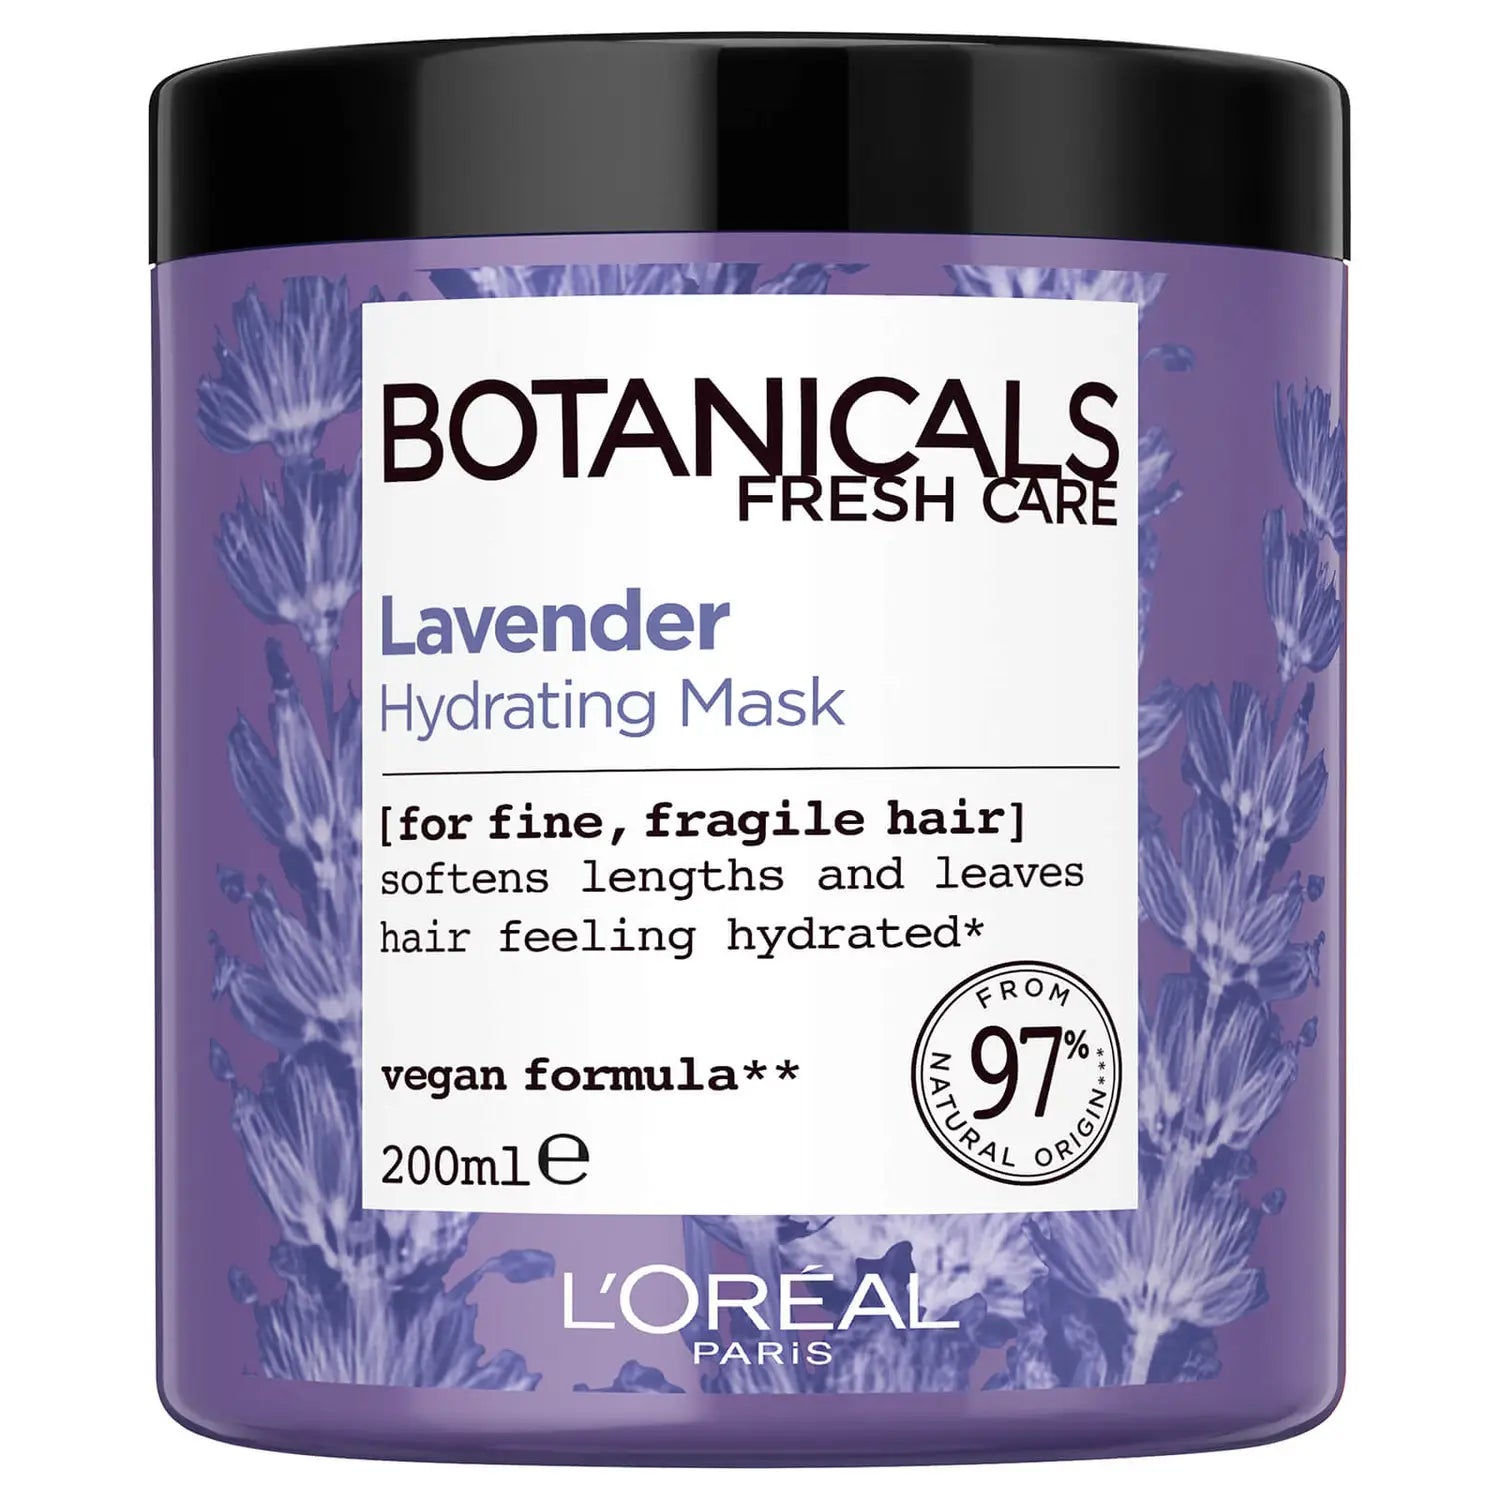 Botanicals Lavender Hydrating Mask 200ml